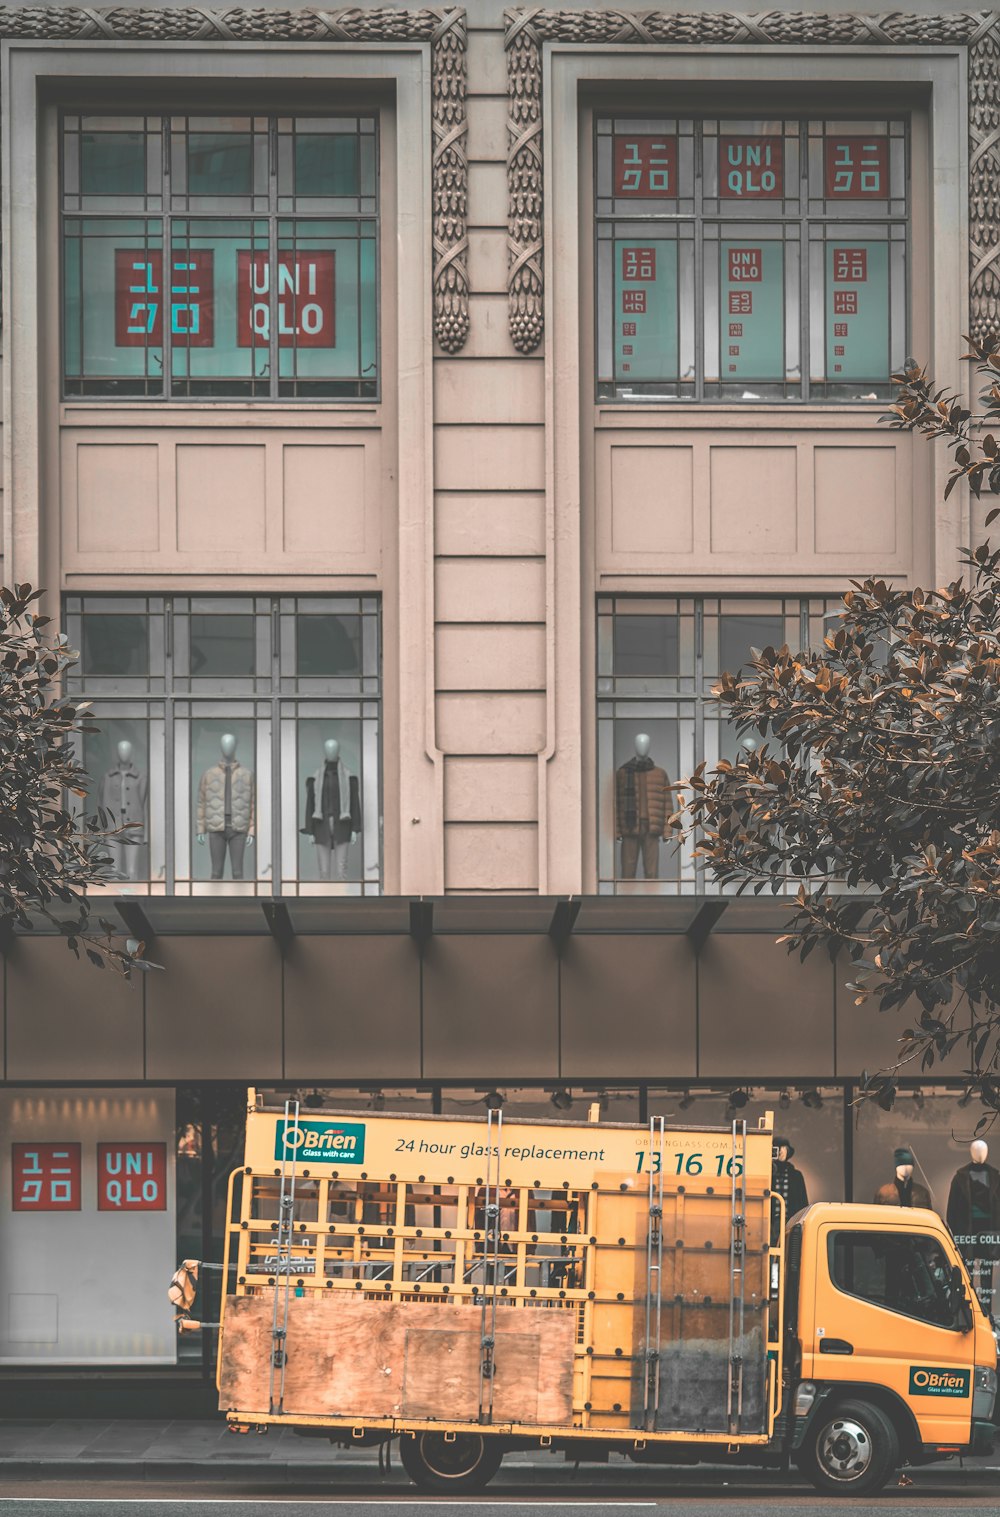 Un camión amarillo estacionado frente a un edificio